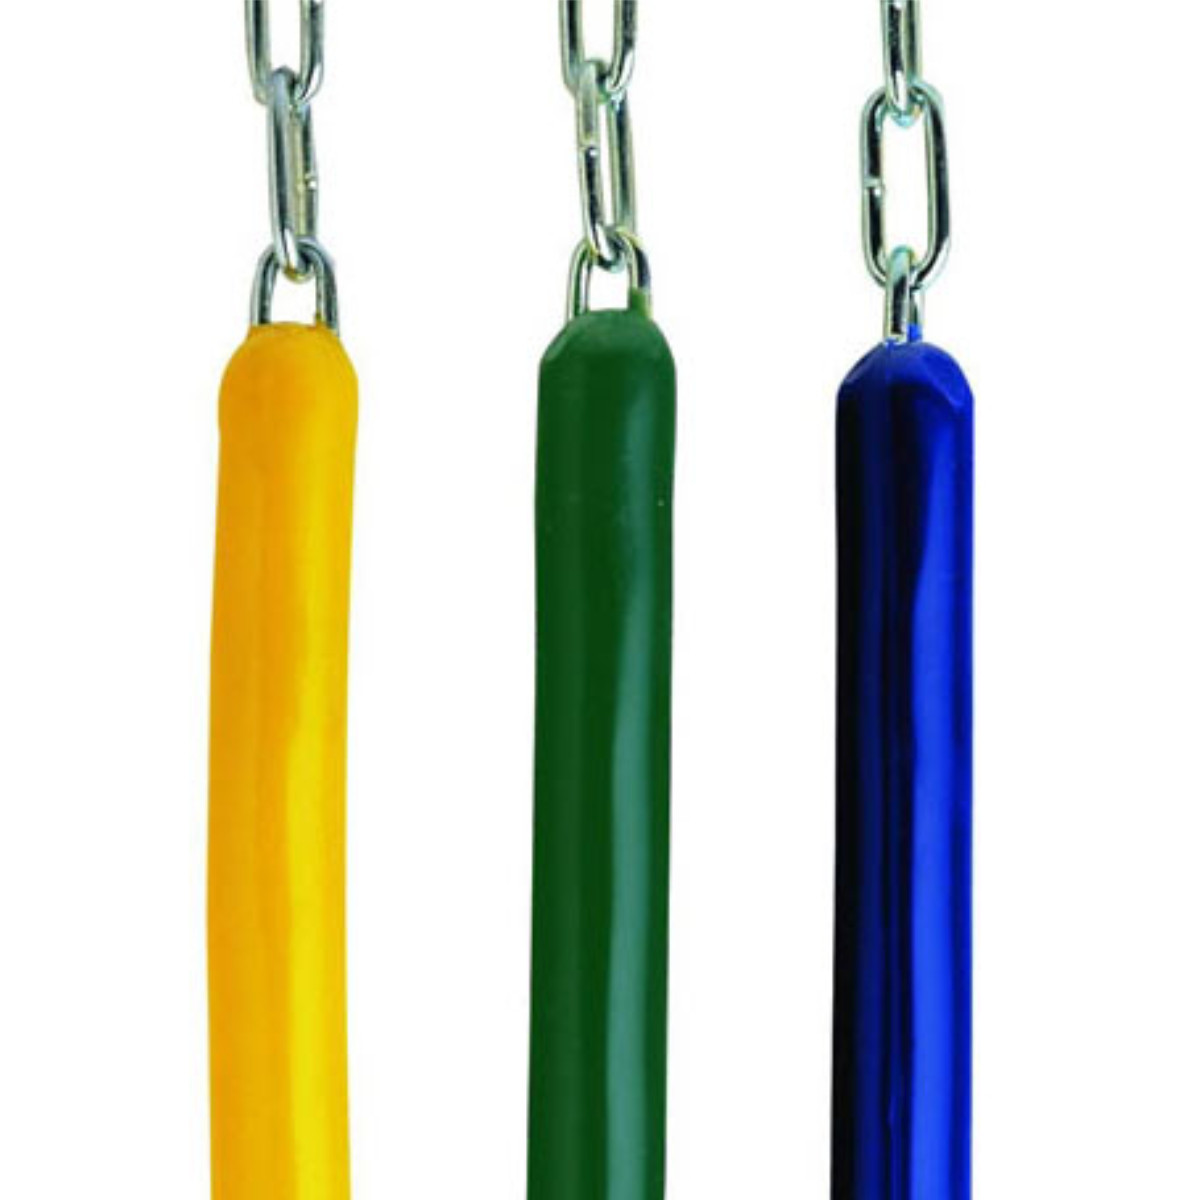 Soft Grip Swing Chain - Yellow, Green, Blue